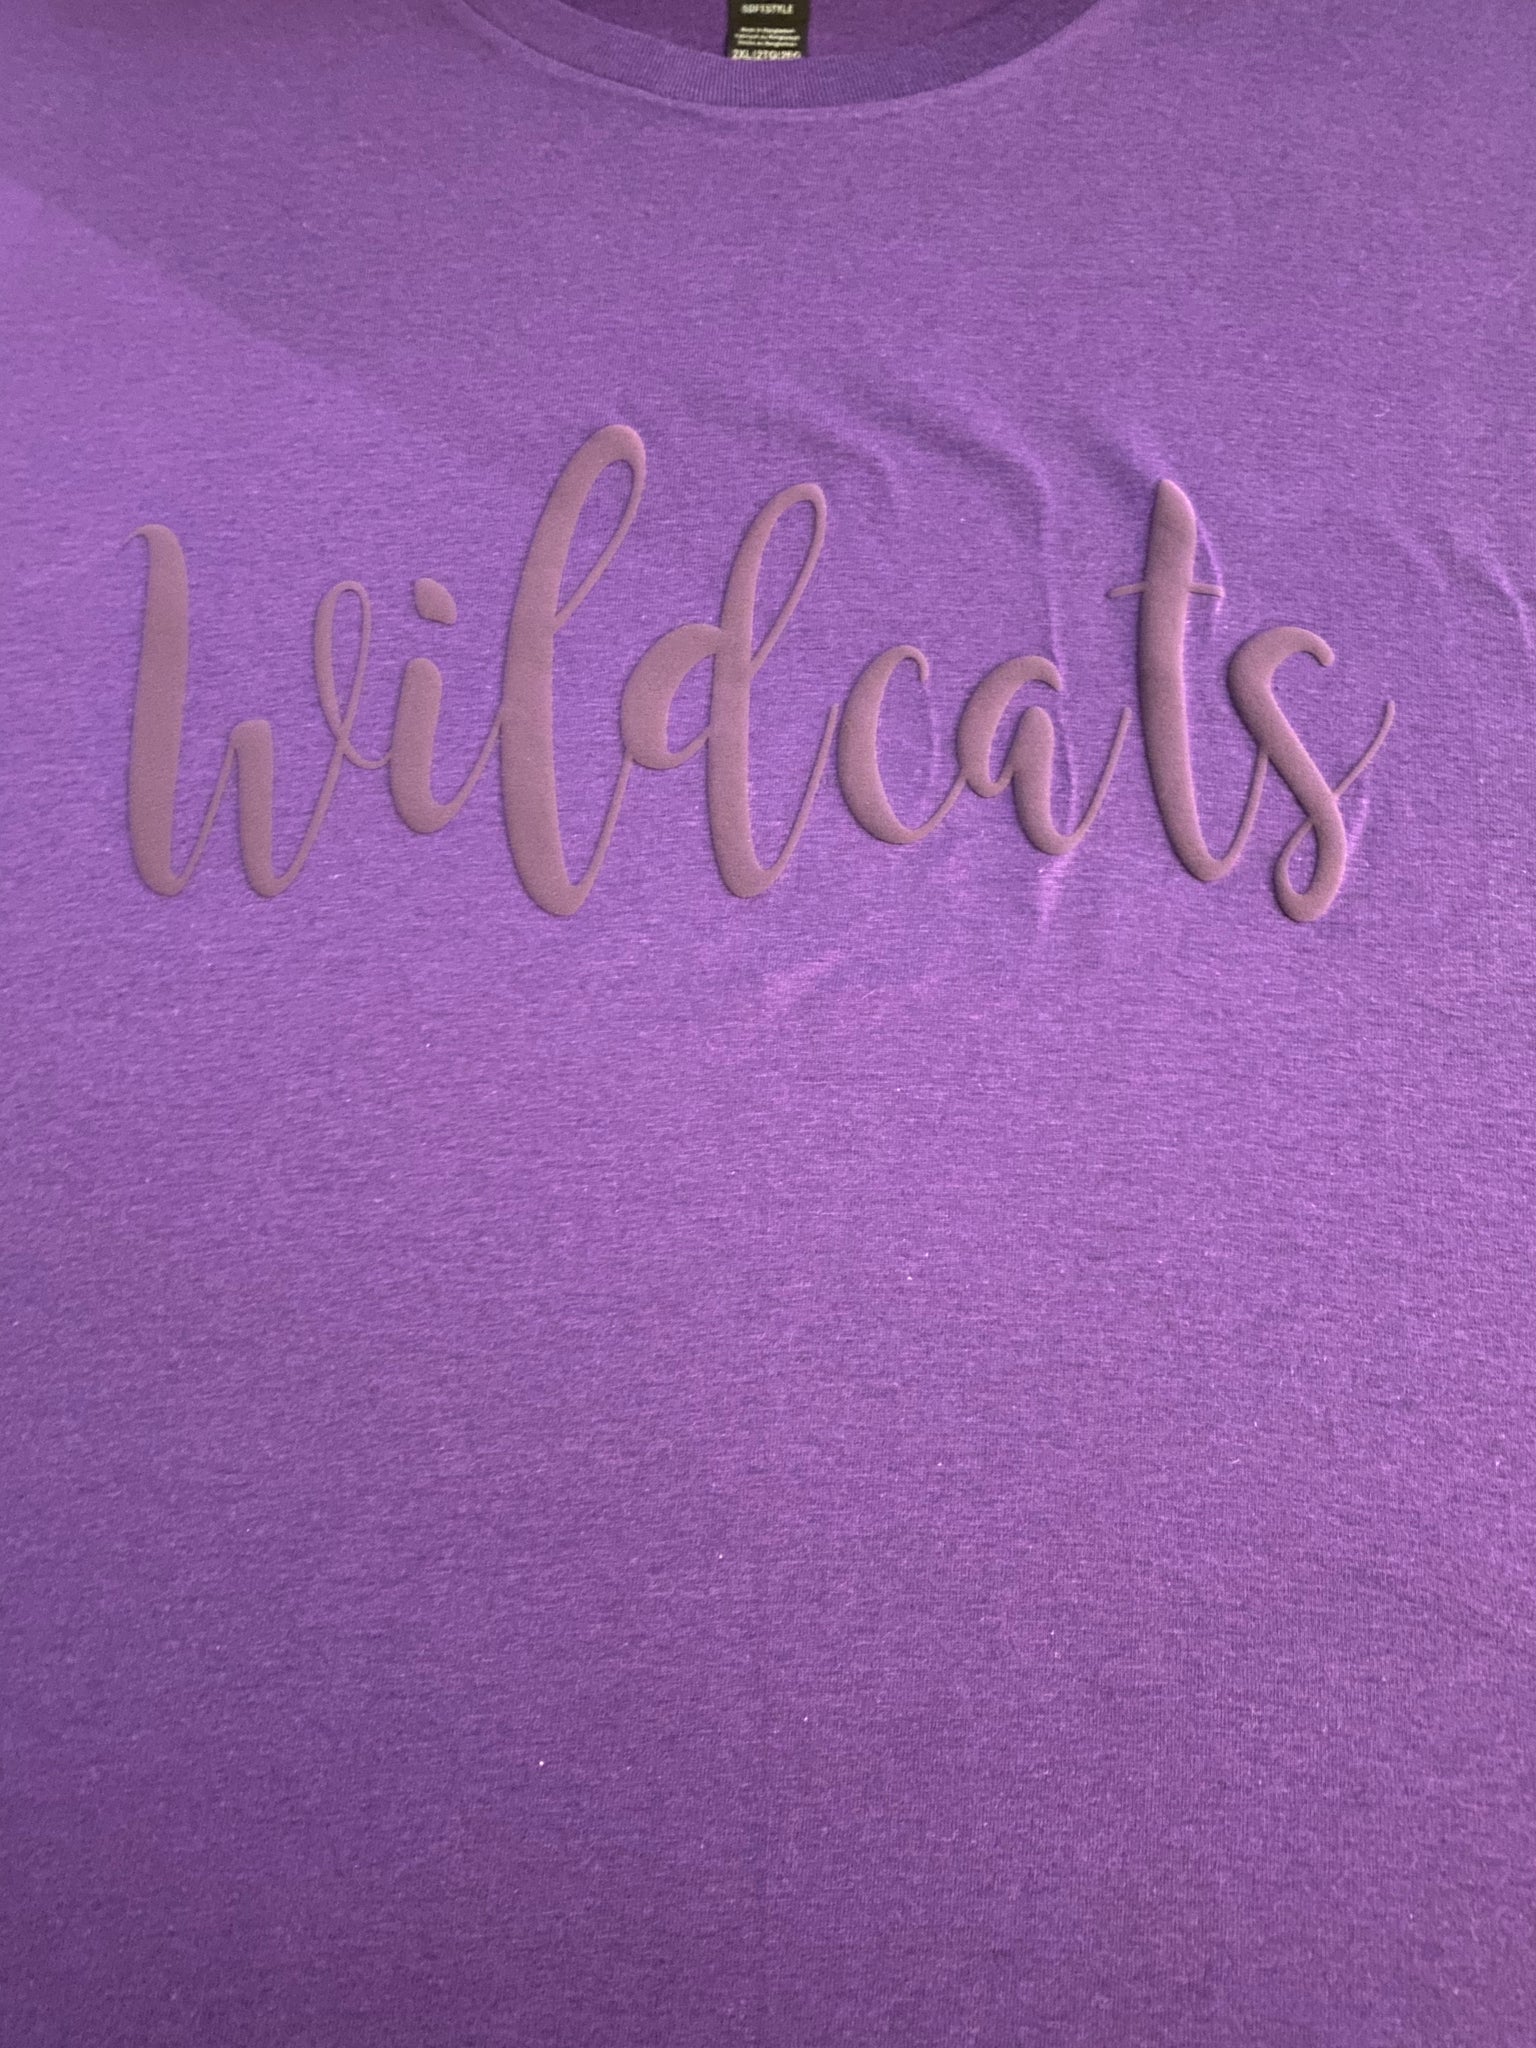 Wildcats Puff Purple on Purple Short Sleeve Shirt